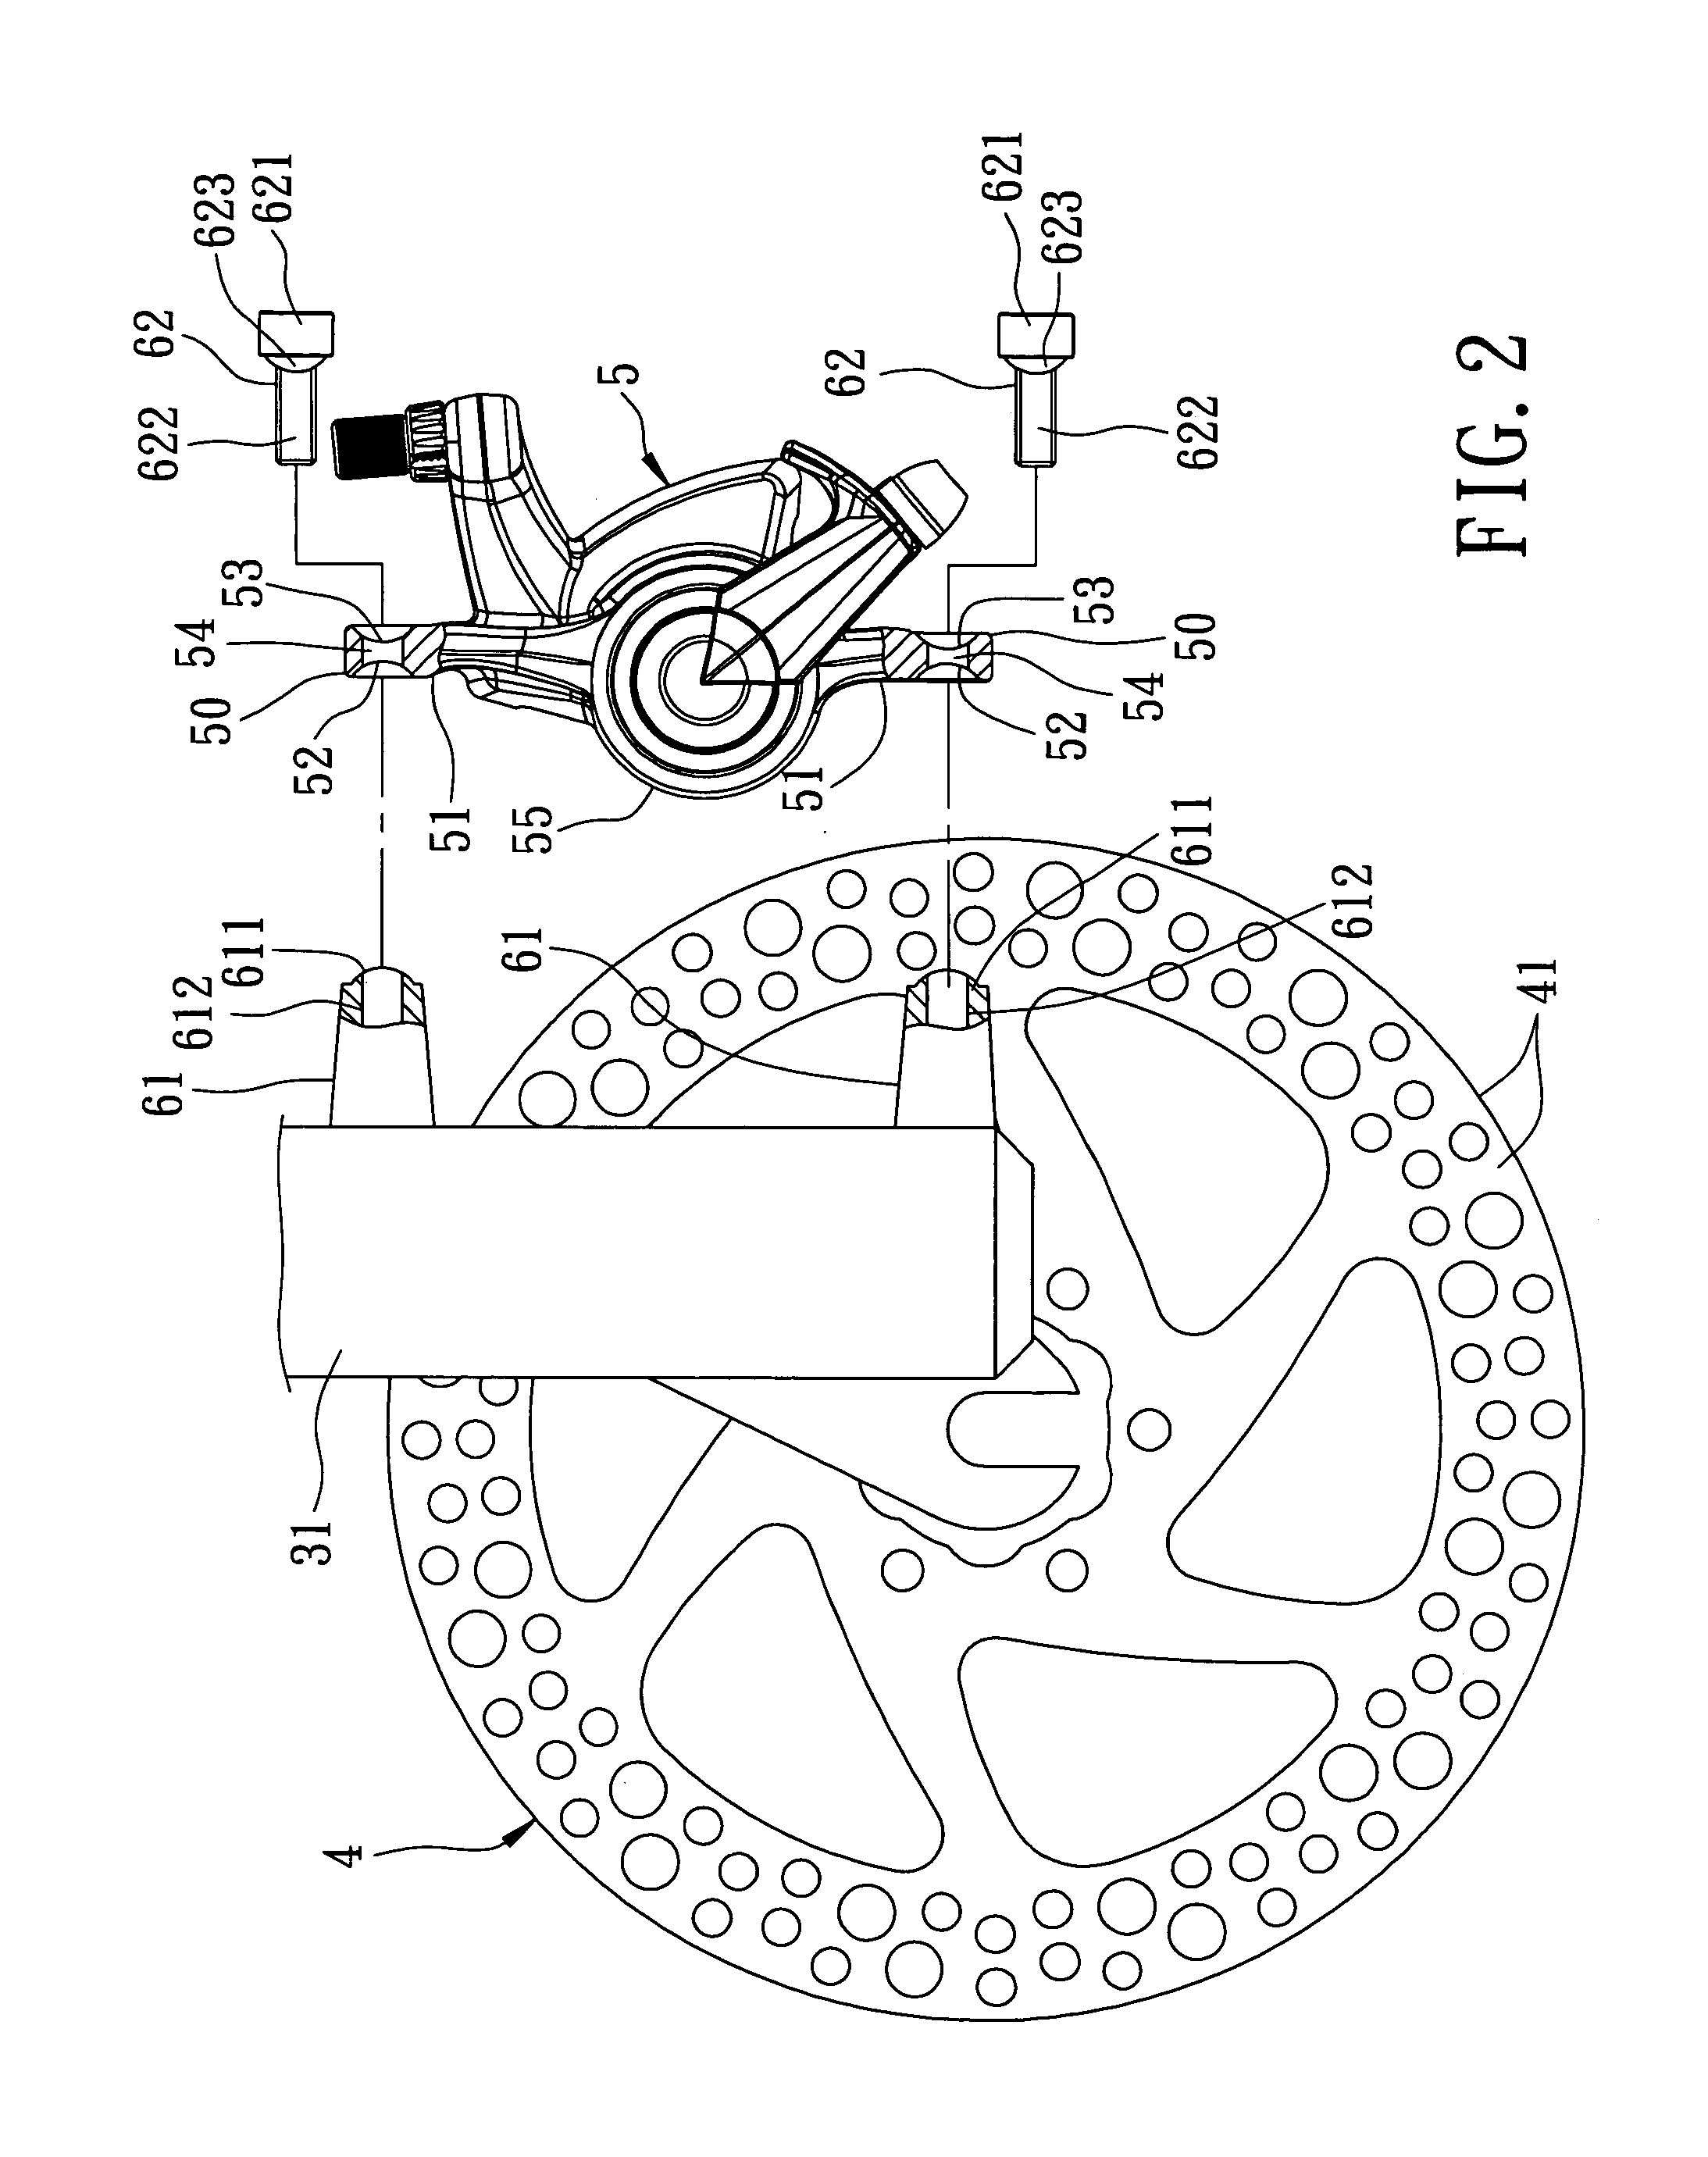 Bicycle disk brake device